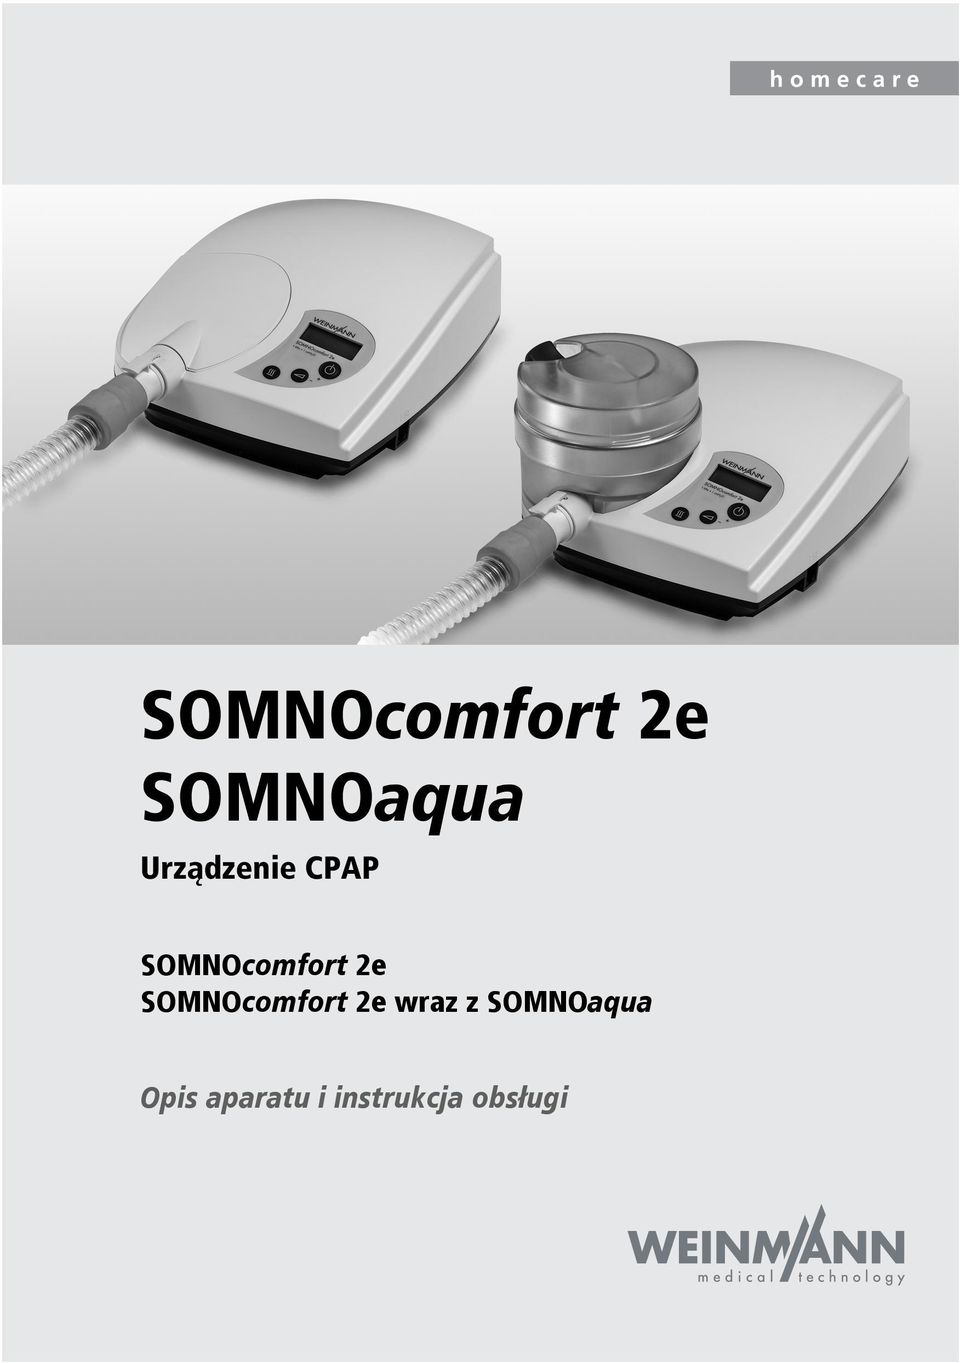 2e SOMNOcomfort 2e wraz z